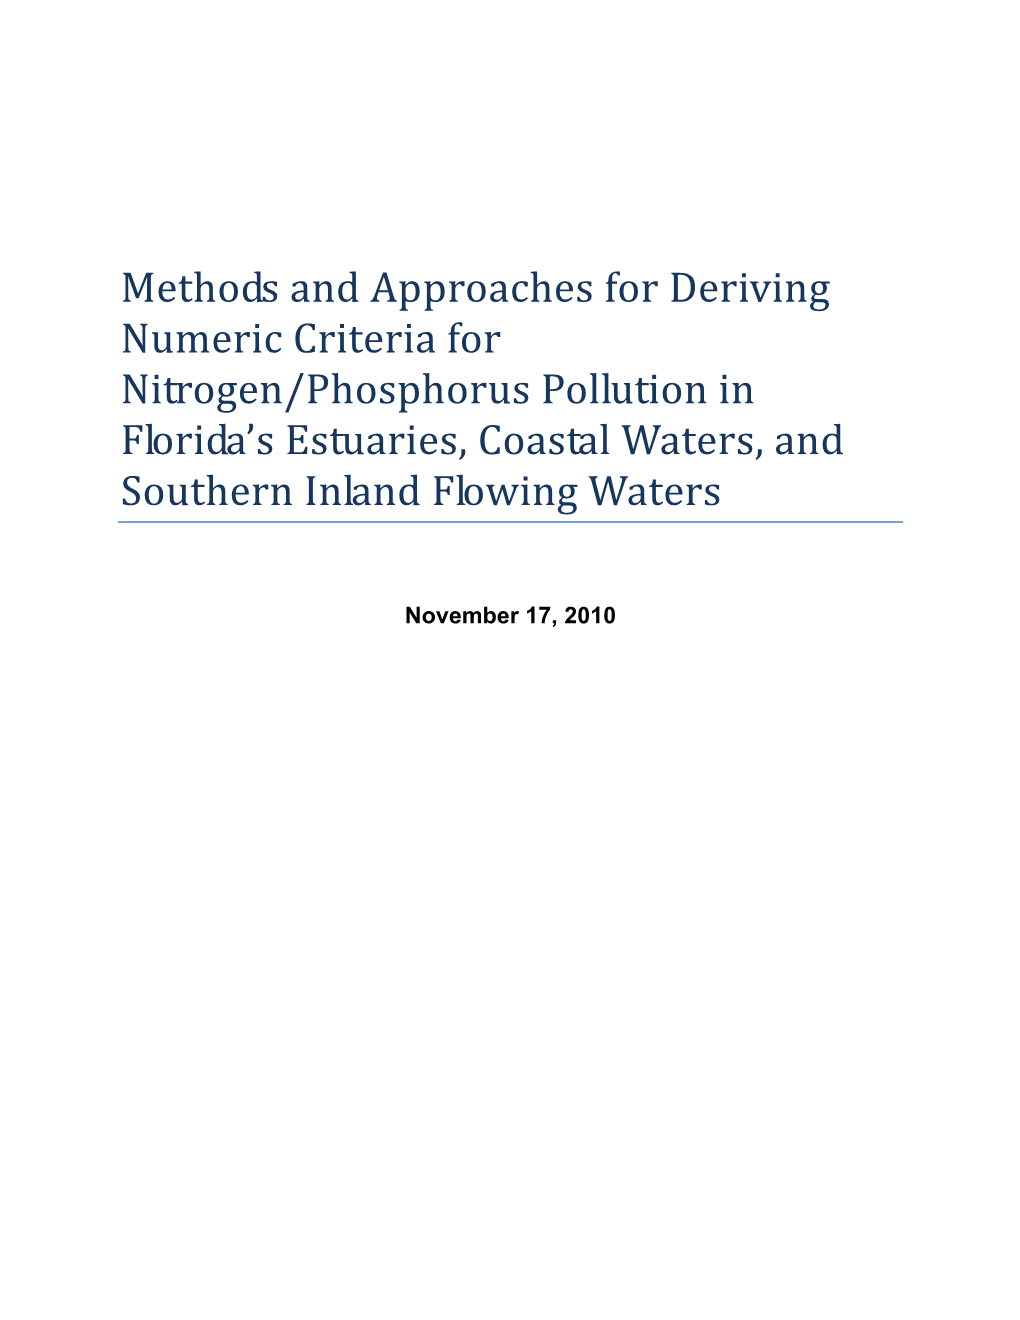 Methods and Approaches for Deriving Numeric Criteria for Nitrogen/Phosphorus Pollution in Florida's Estuaries